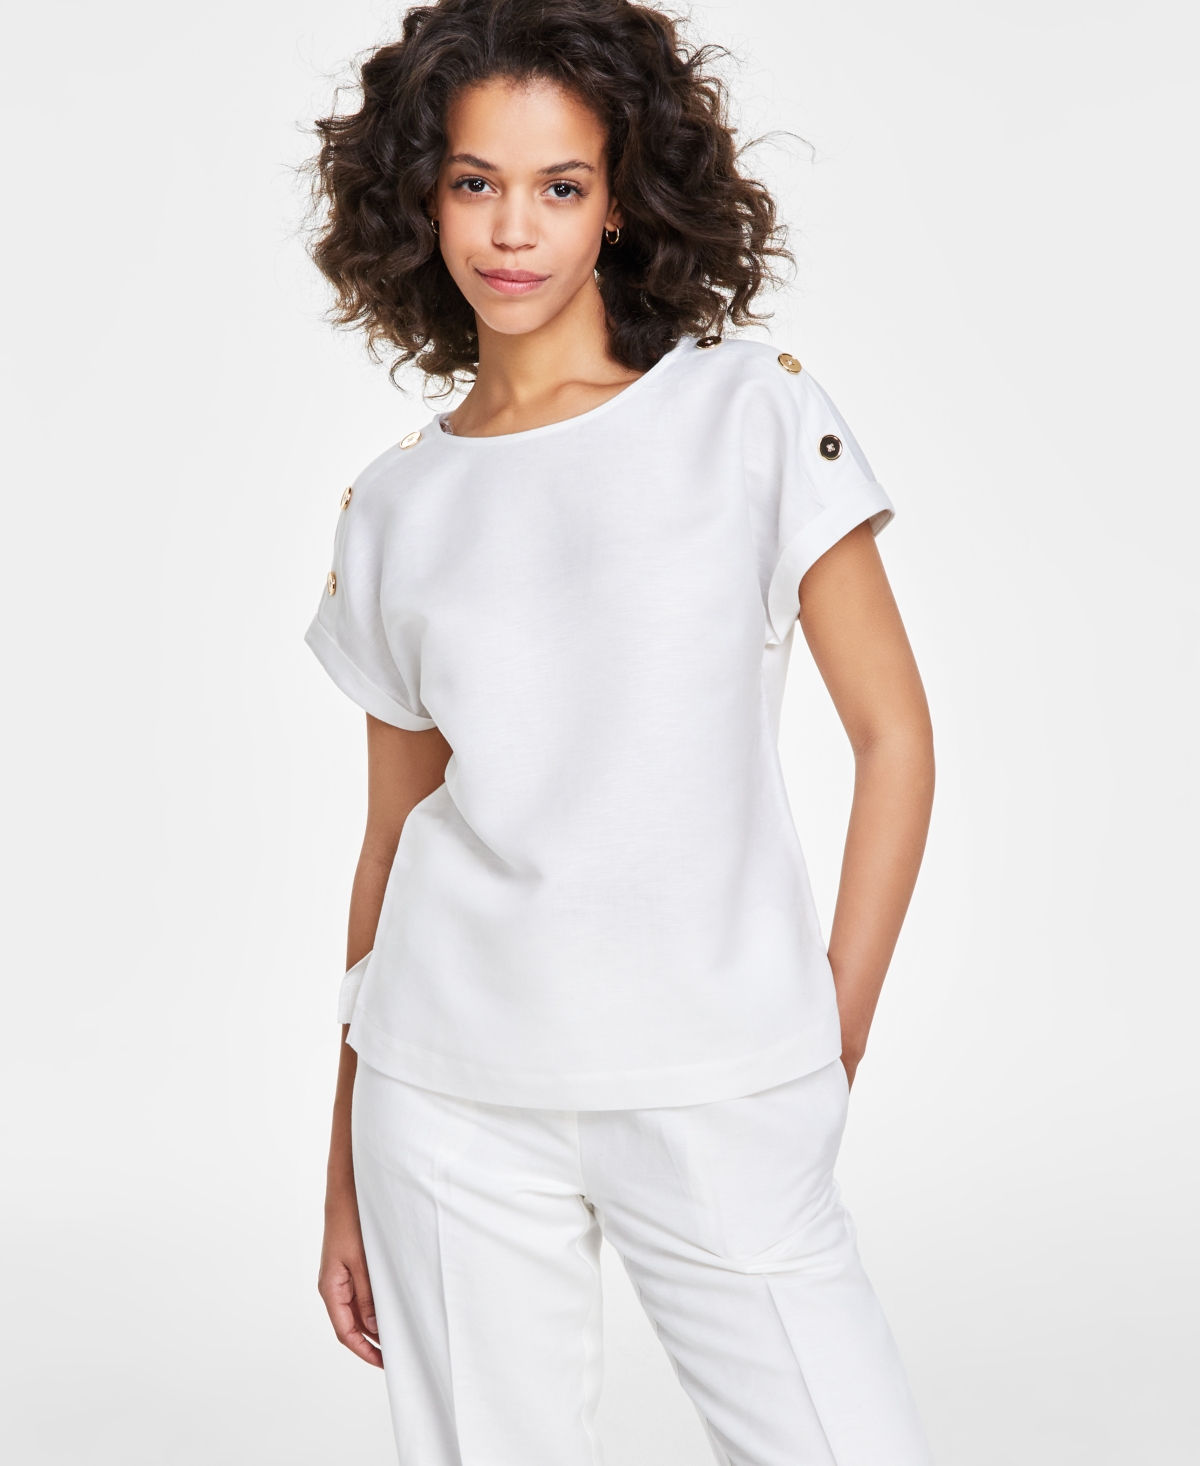 Women's Button-Shoulder Short-Sleeve Top - Bright White